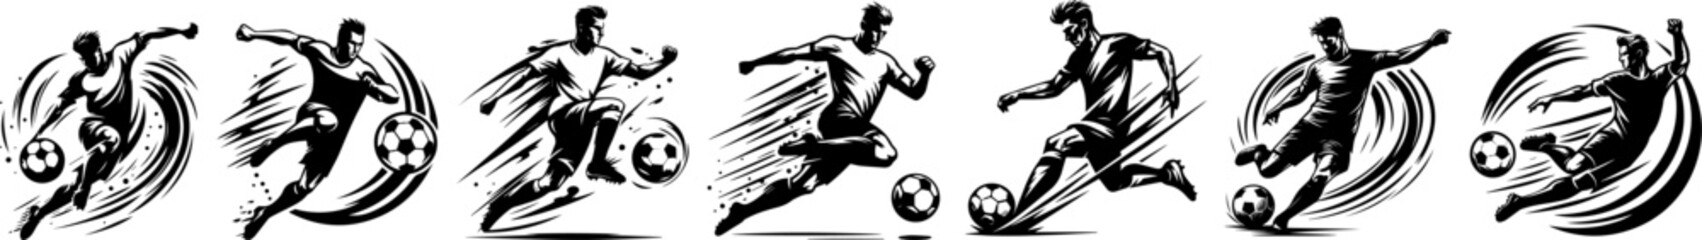 football soccer ball vector illustration silhouette laser cutting black and white shape